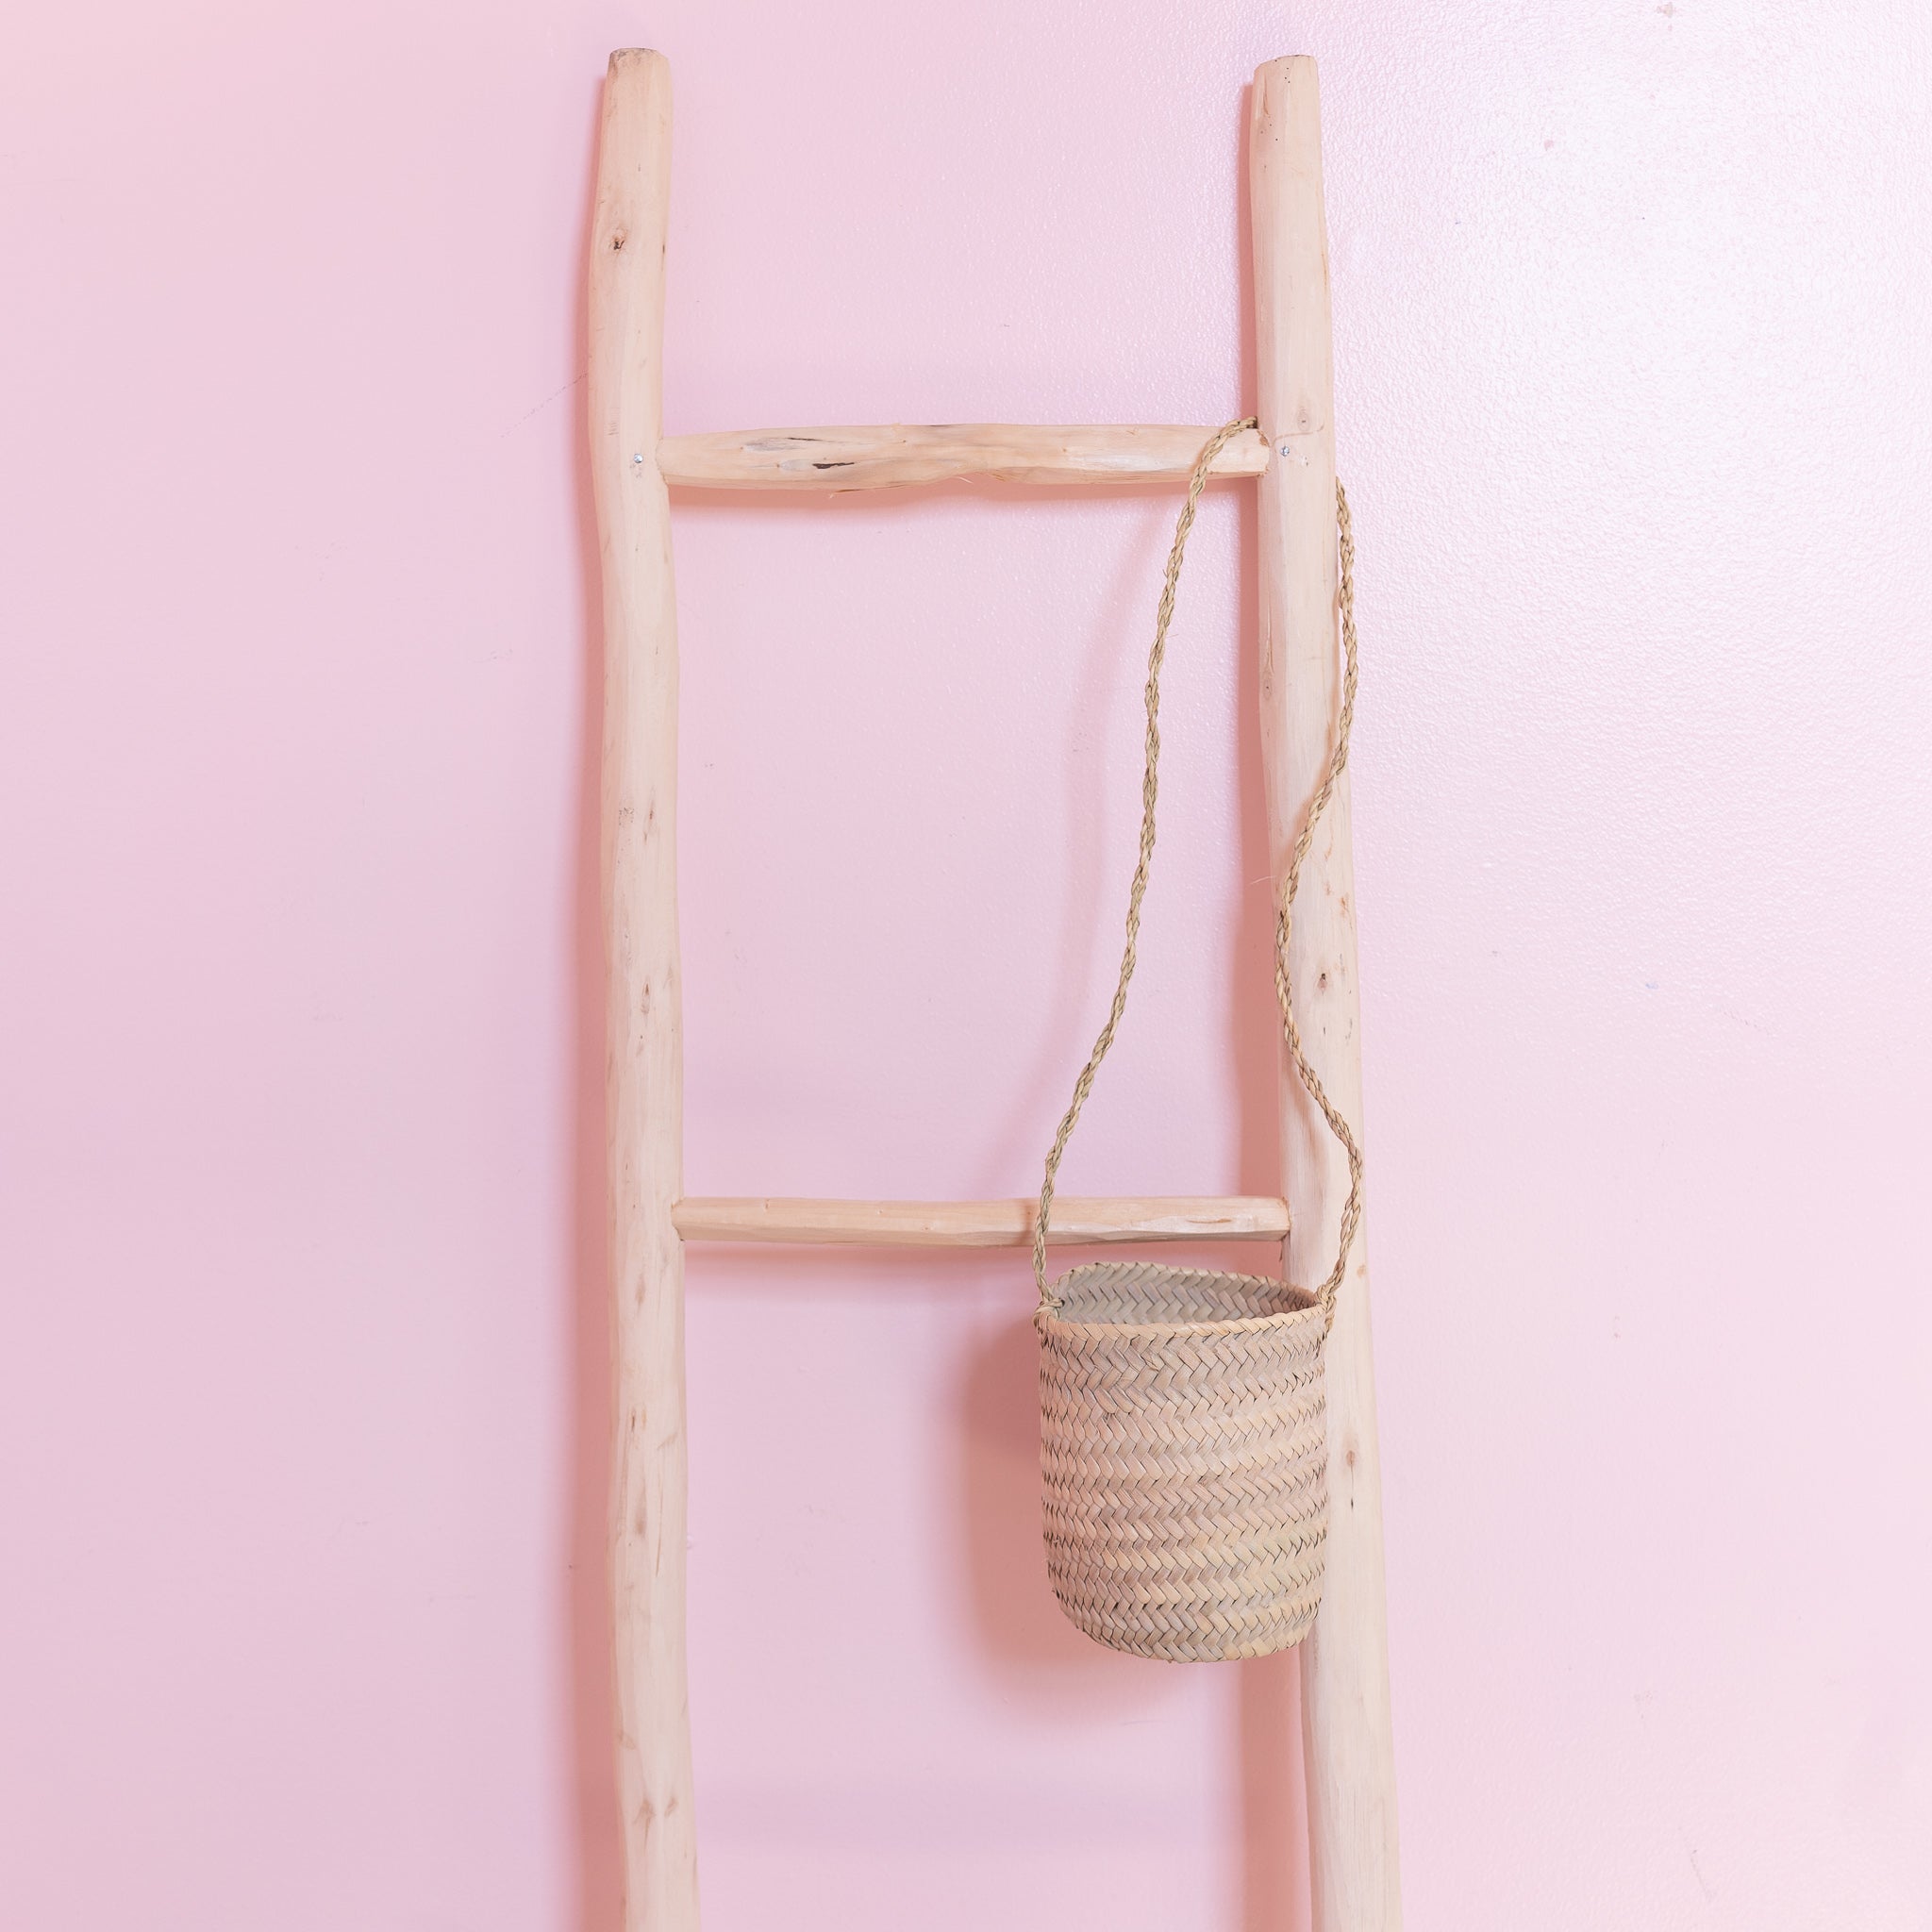 handwoven straw hanging planter